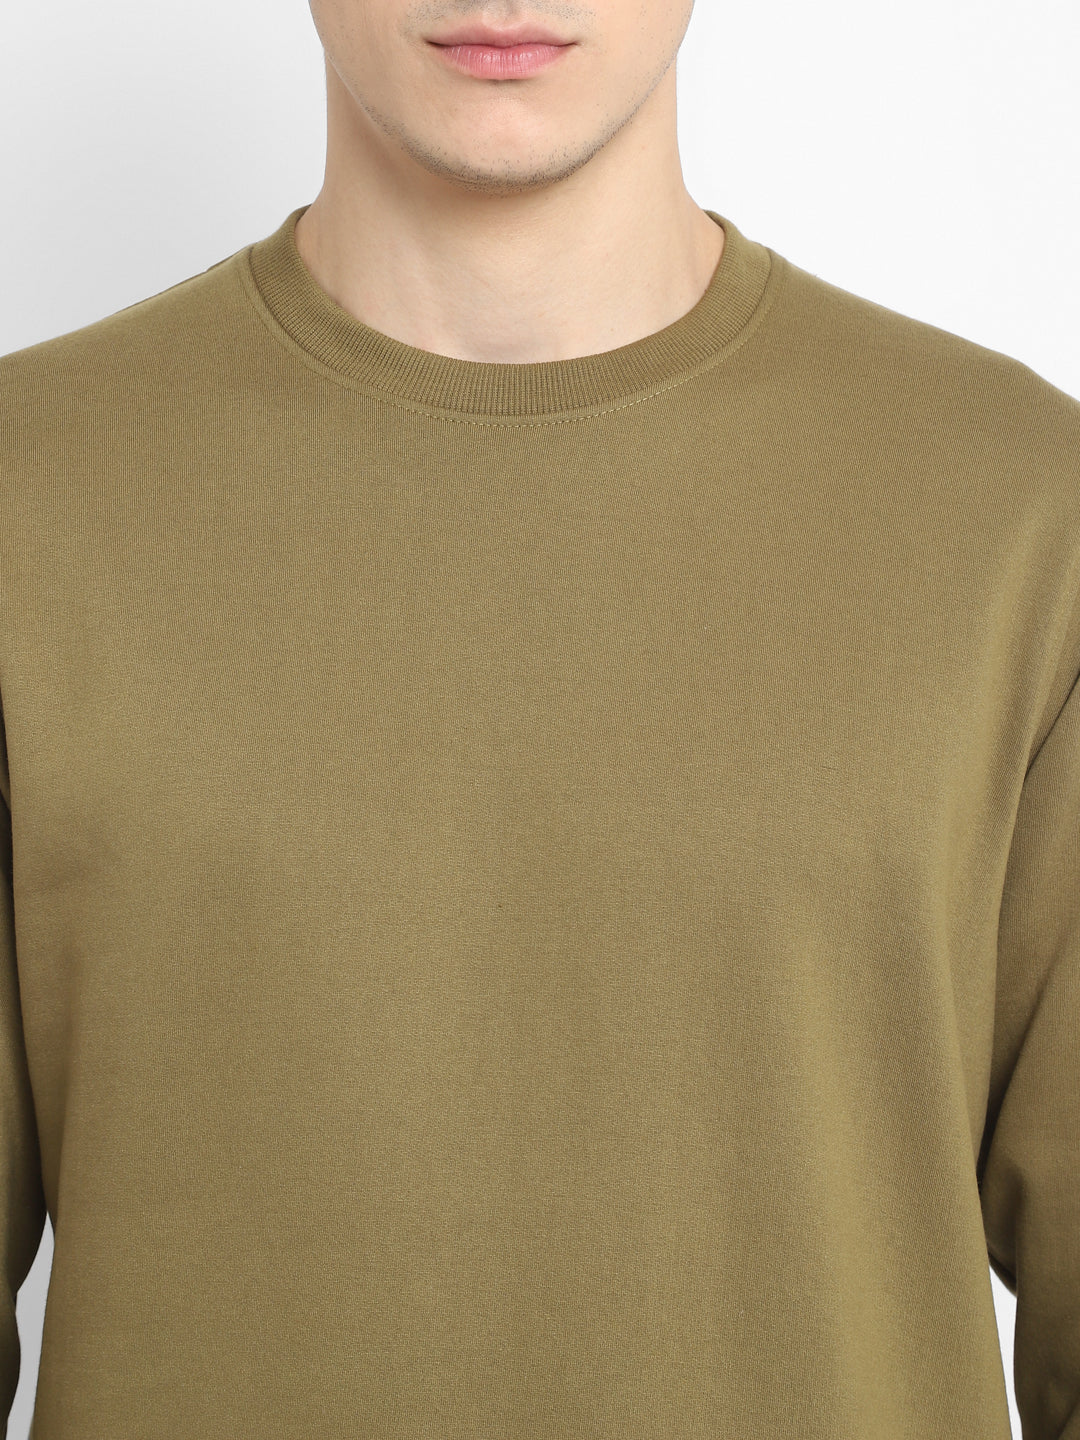 Round Neck Sweatshirt For Men - Martini Olive